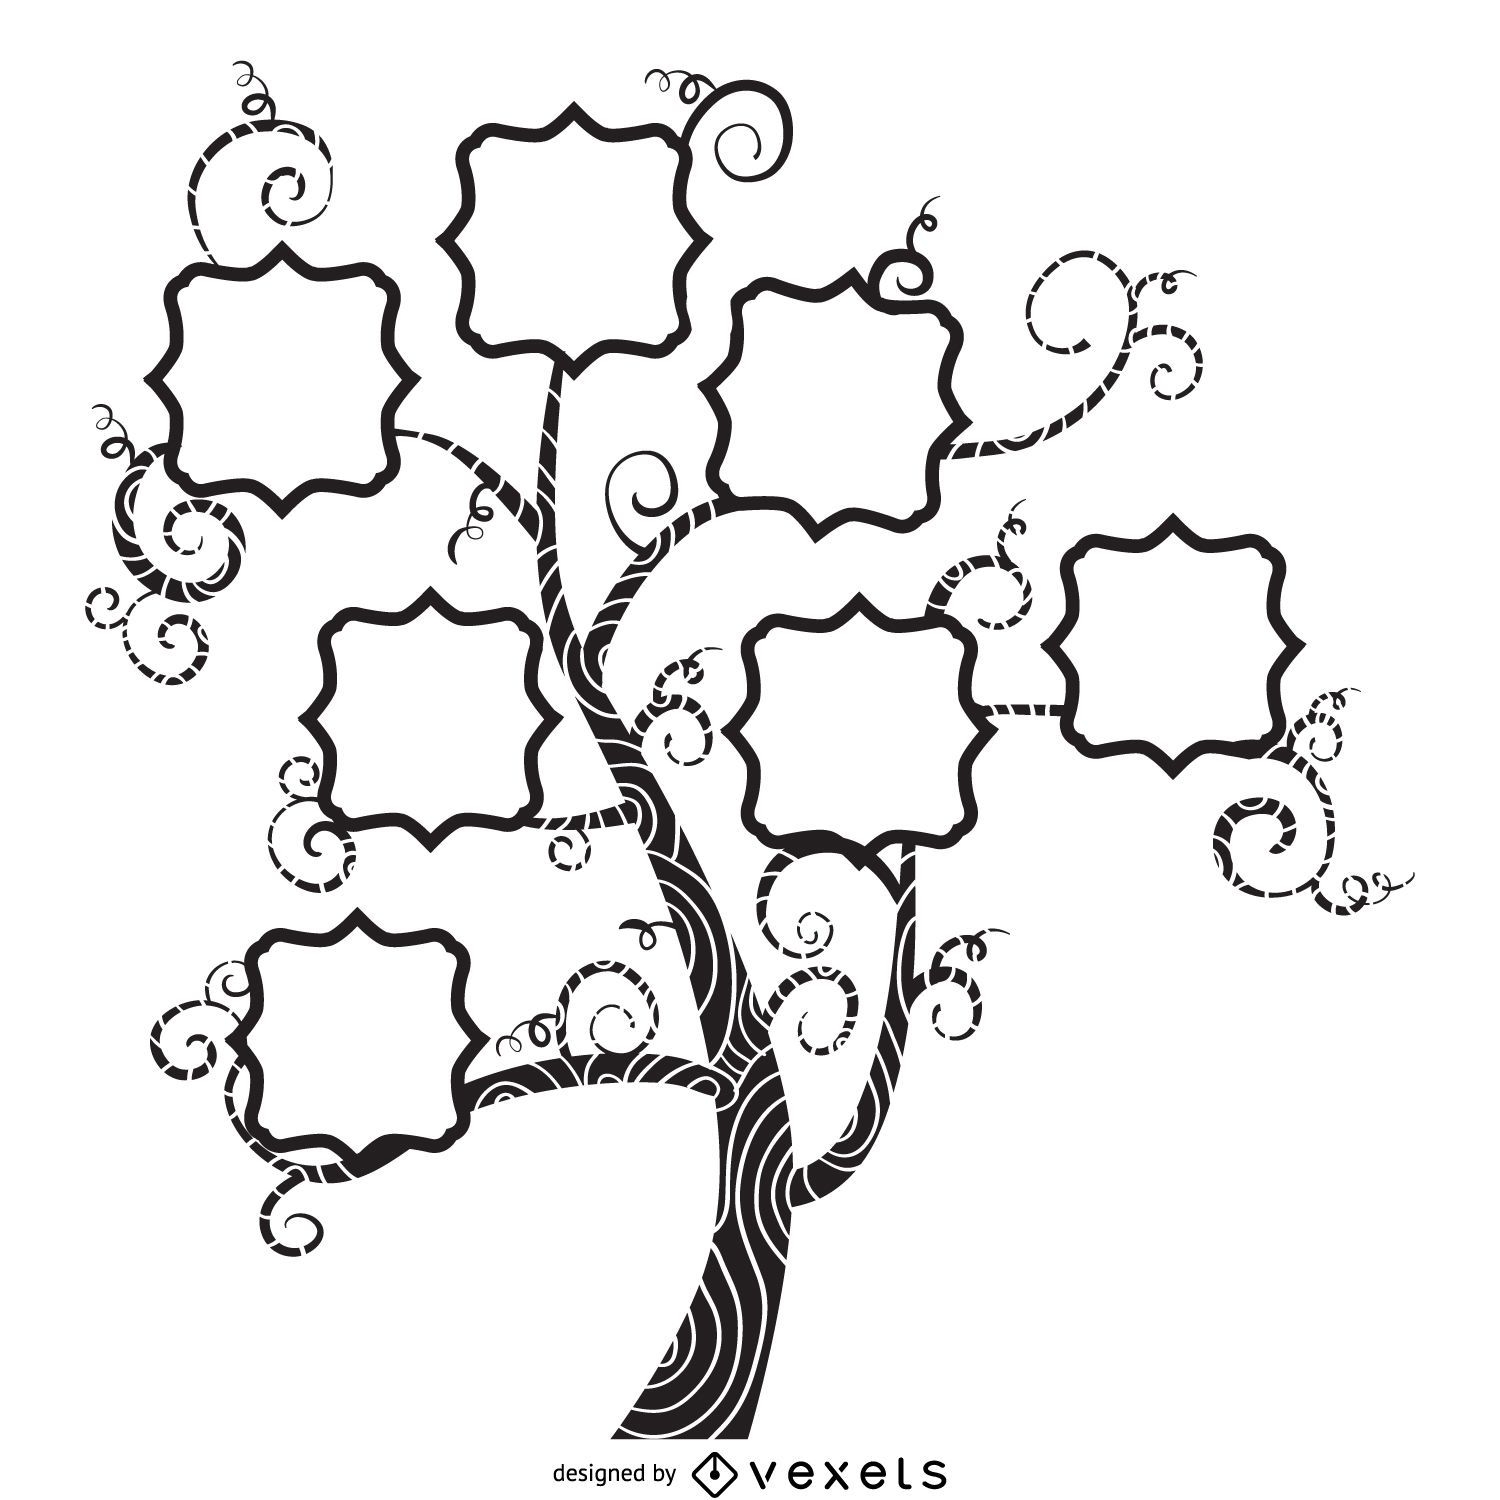 Family tree with swirls design